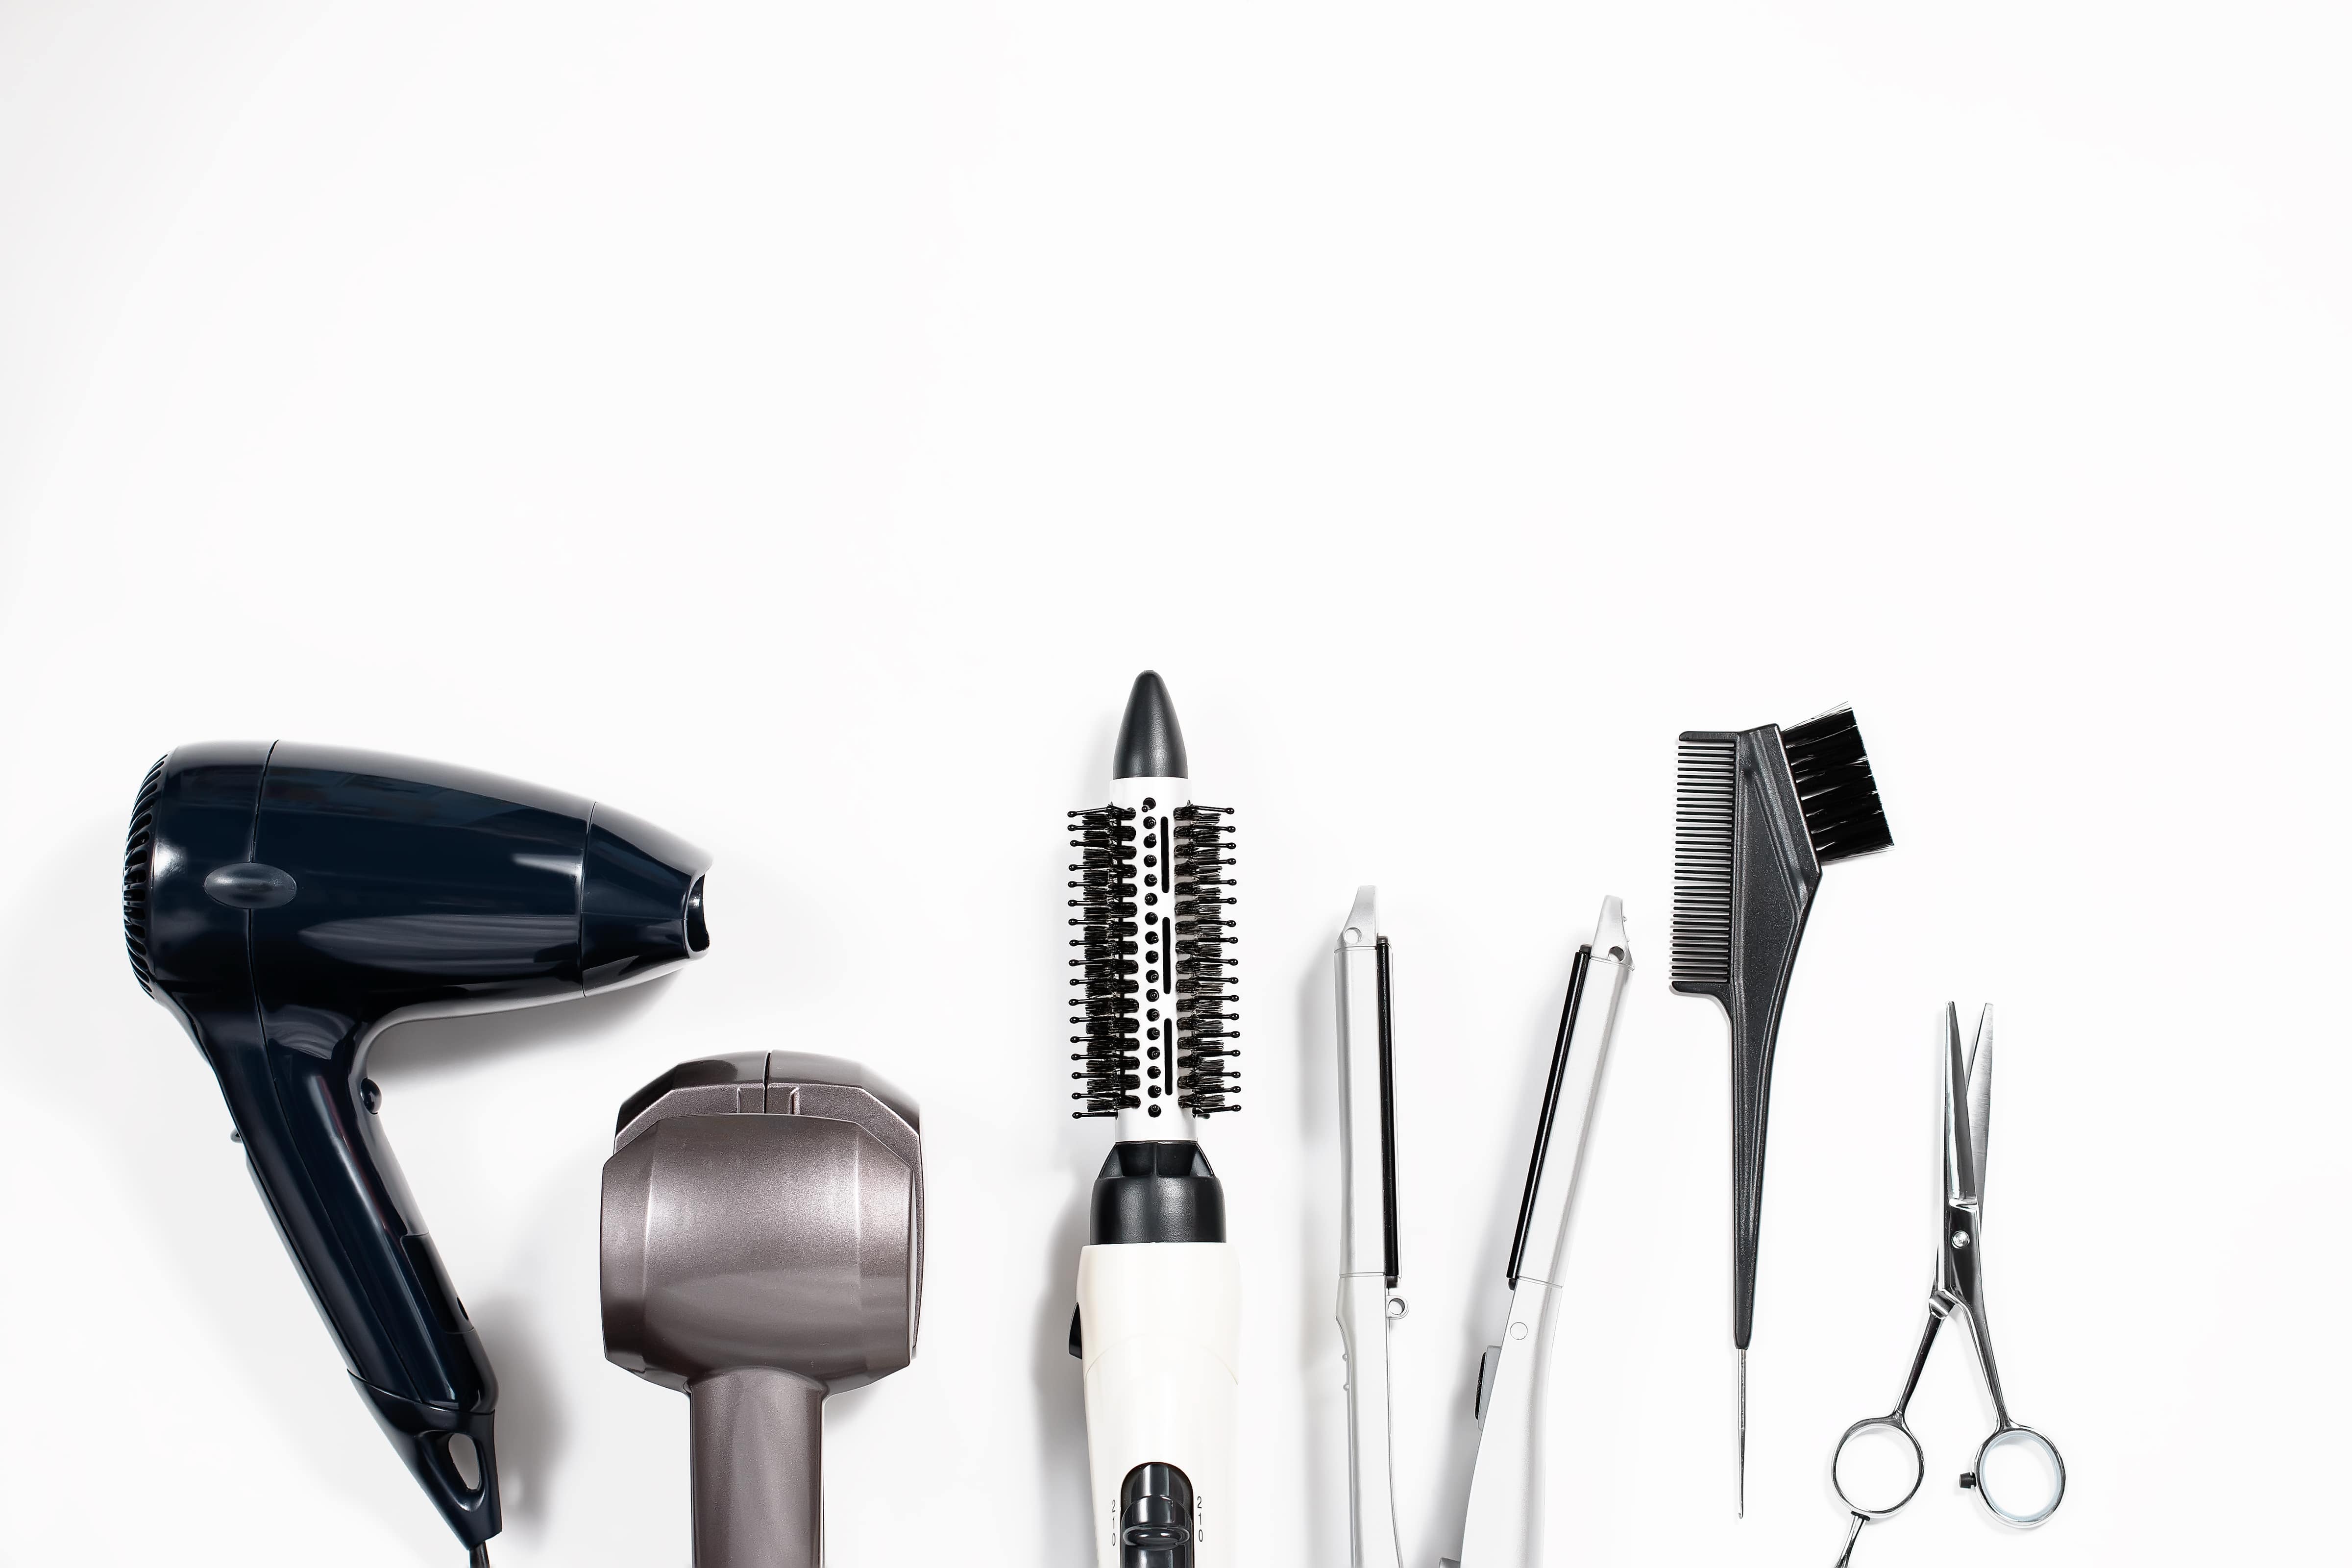 Equipment for easy hair styling